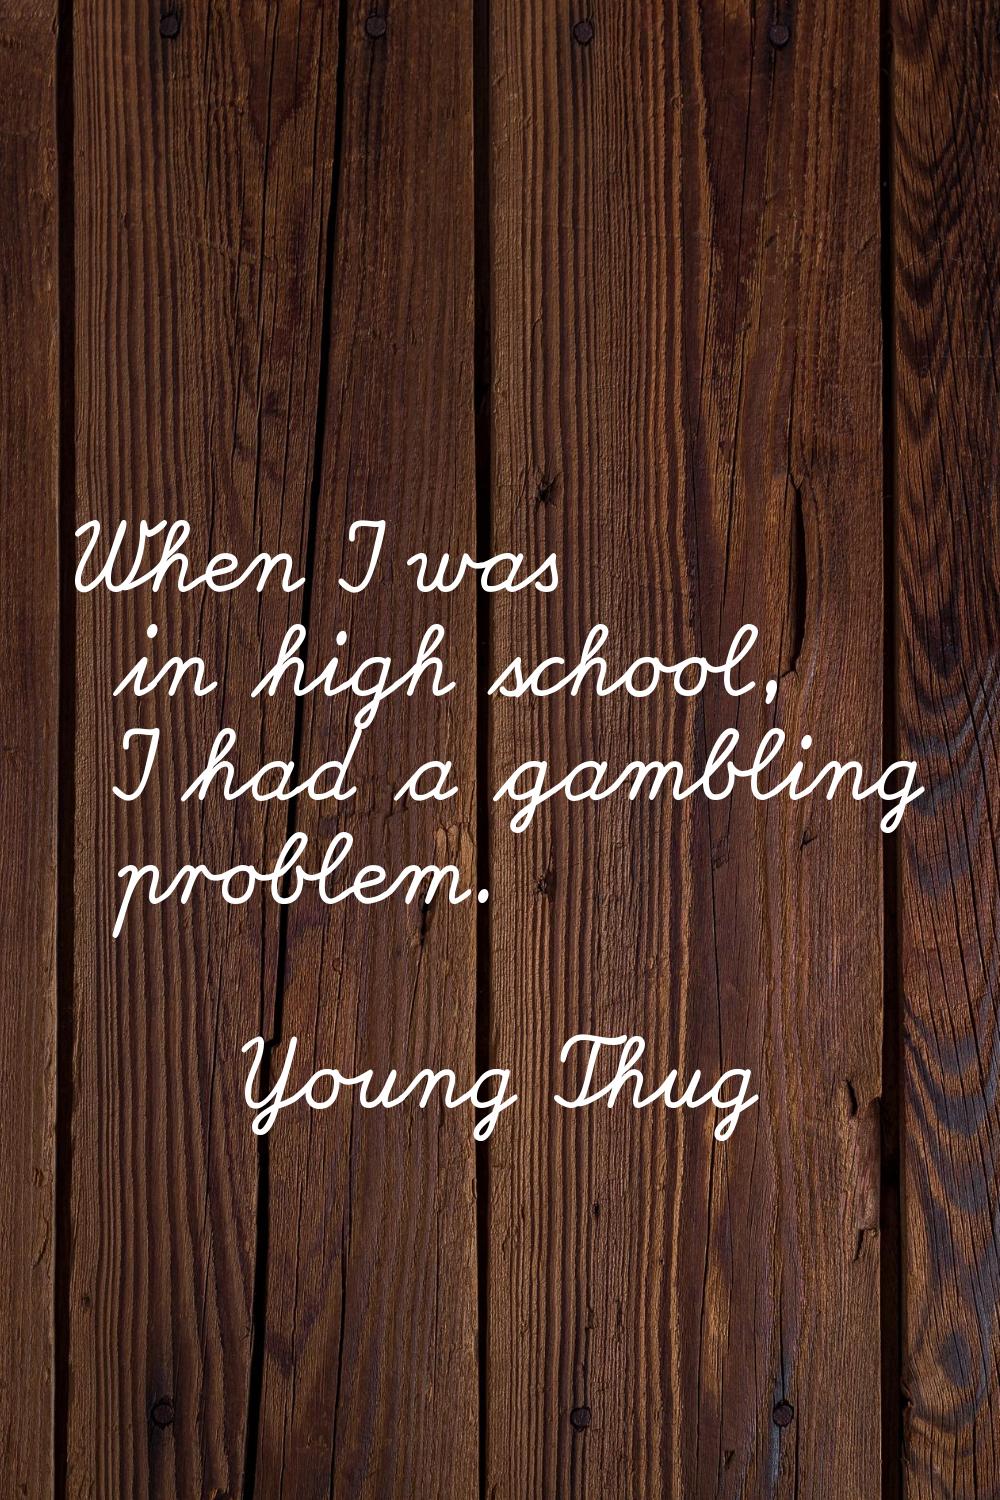 When I was in high school, I had a gambling problem.